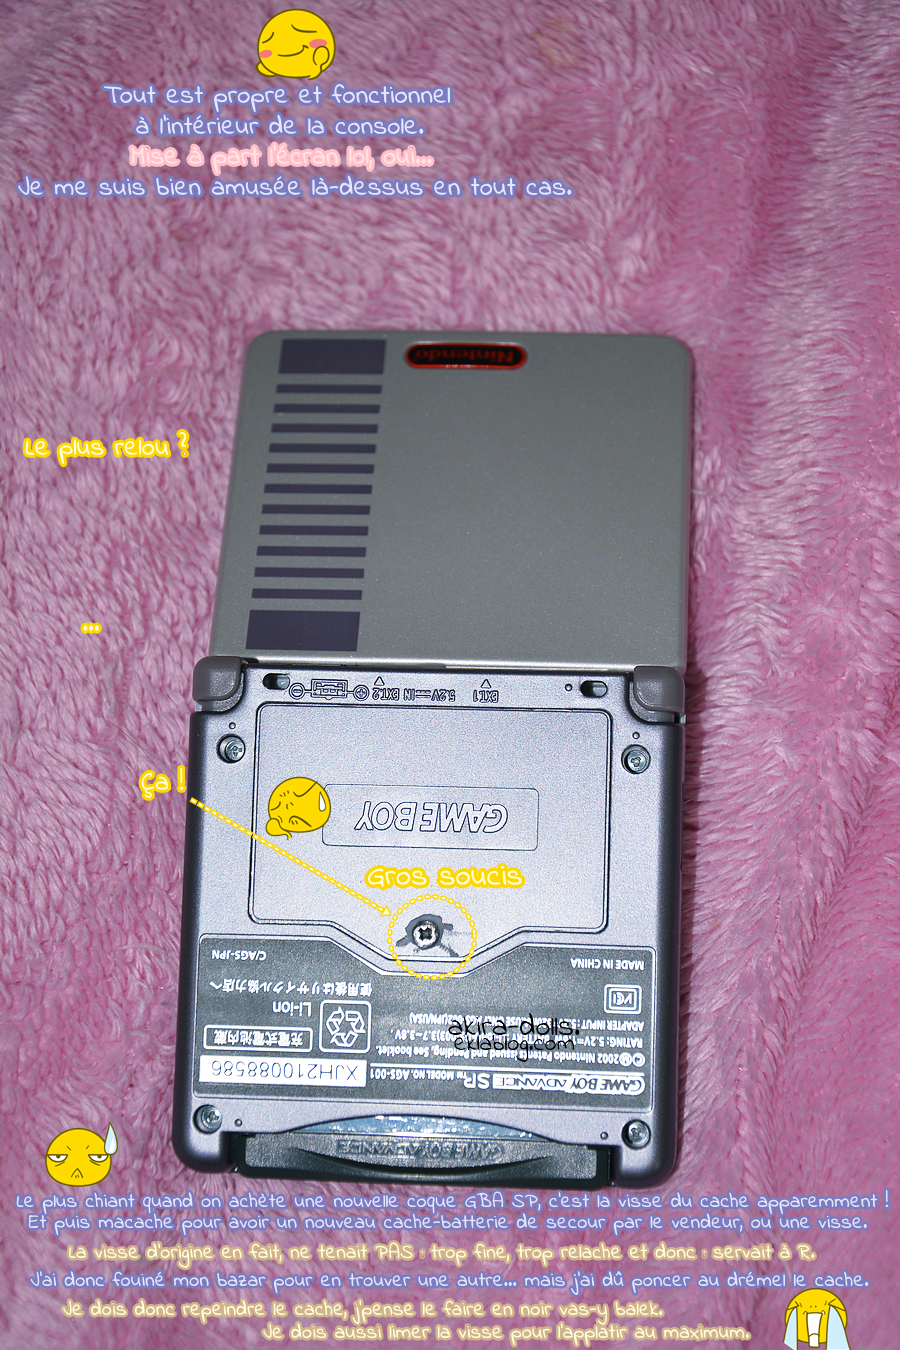 Gameboy SP GBA Nintendo